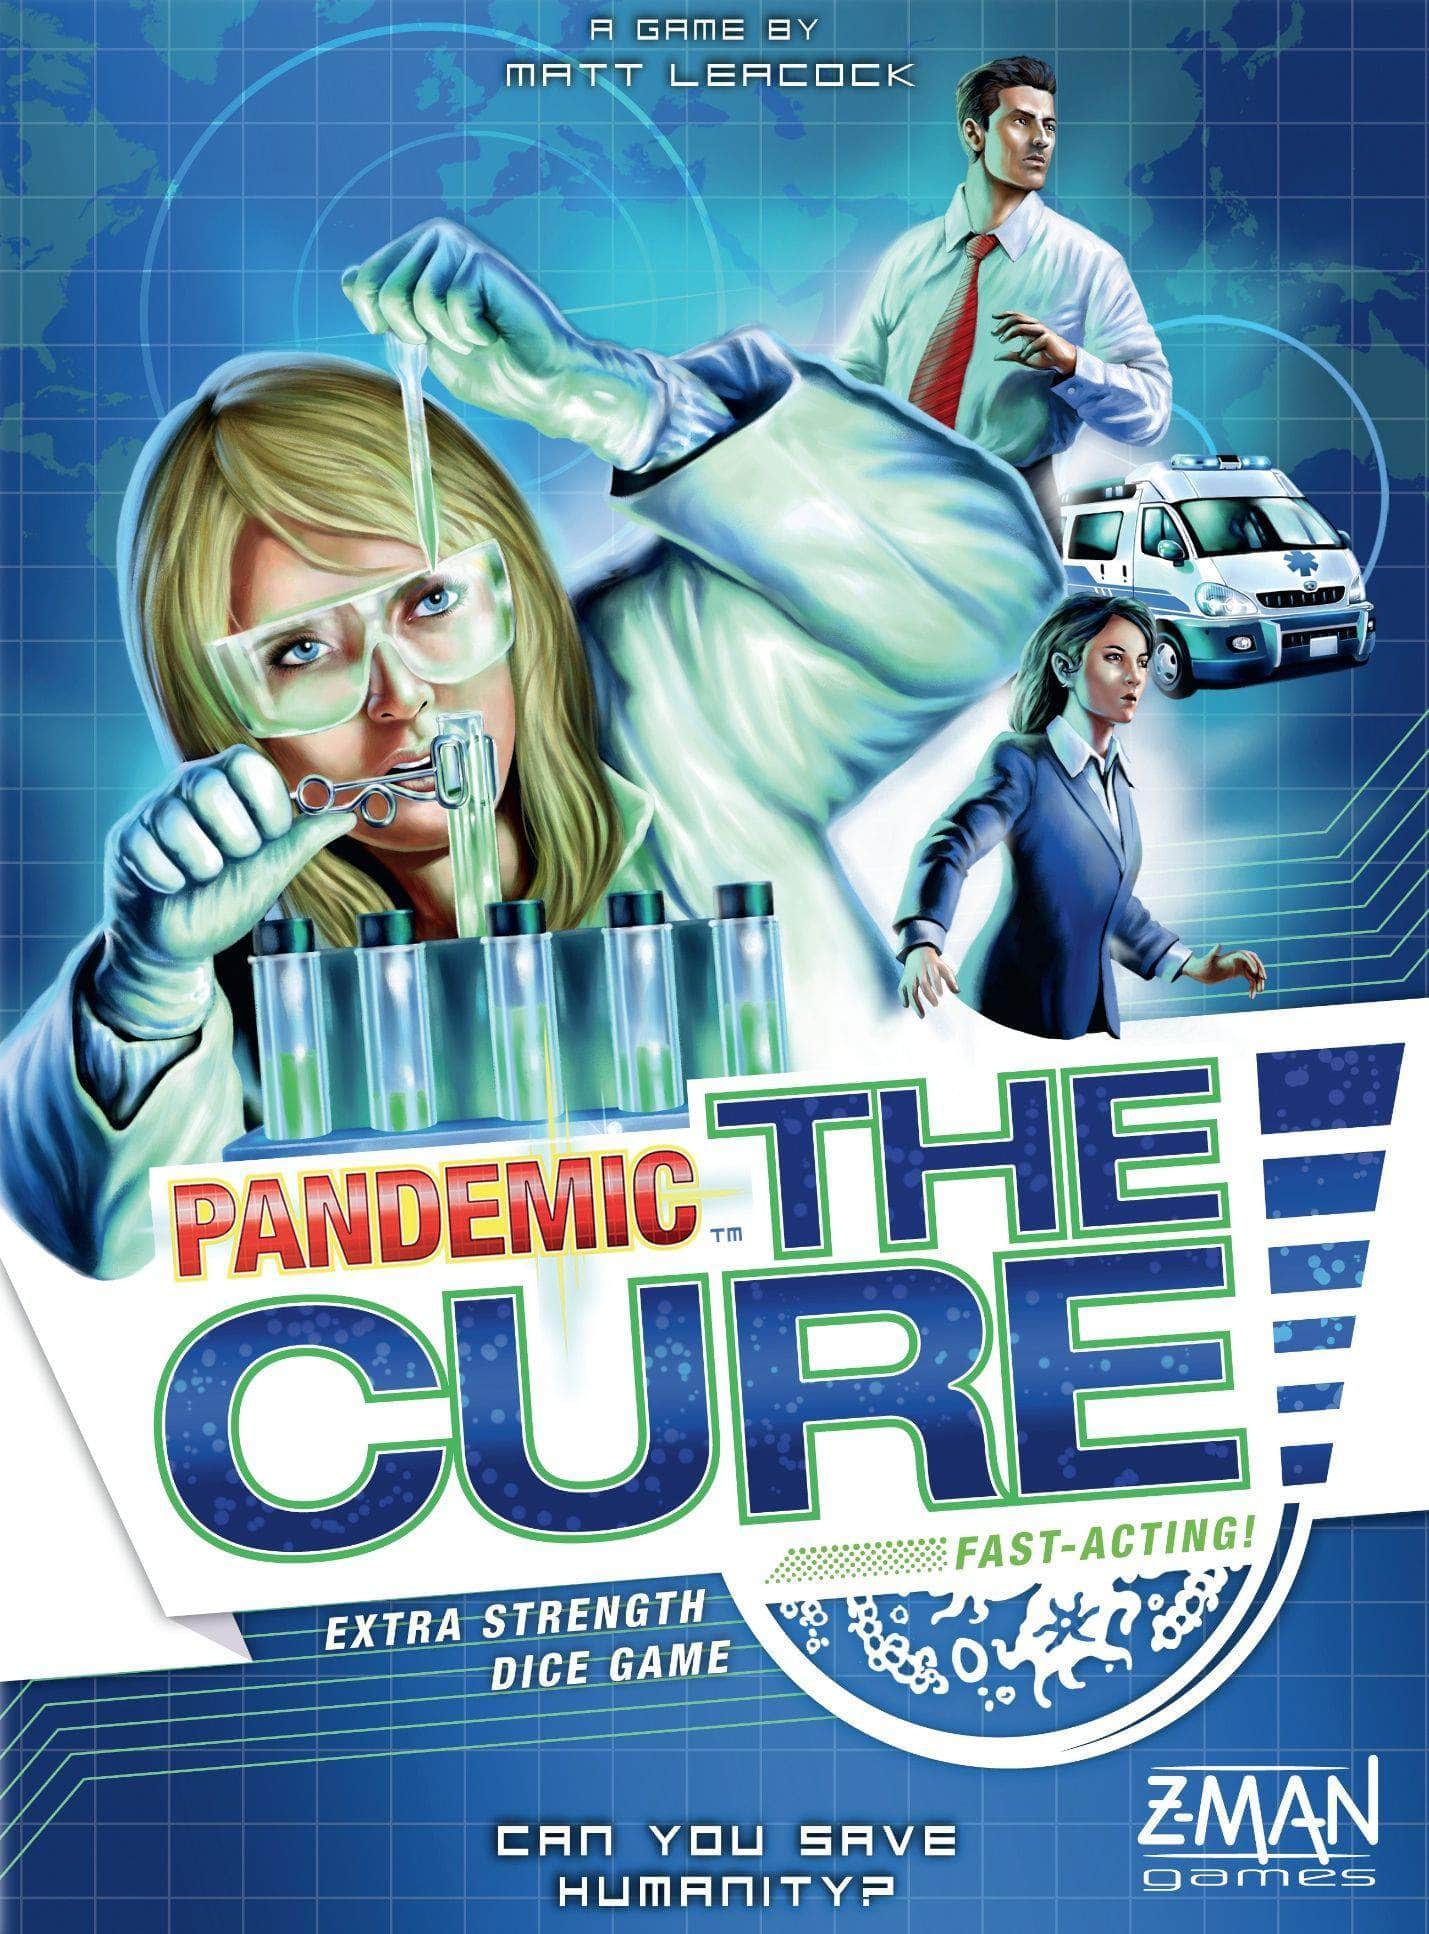 Pandemia: Cure (vähittäiskaupan painos) vähittäiskaupan lautapeli Z-Man Games KS800393A